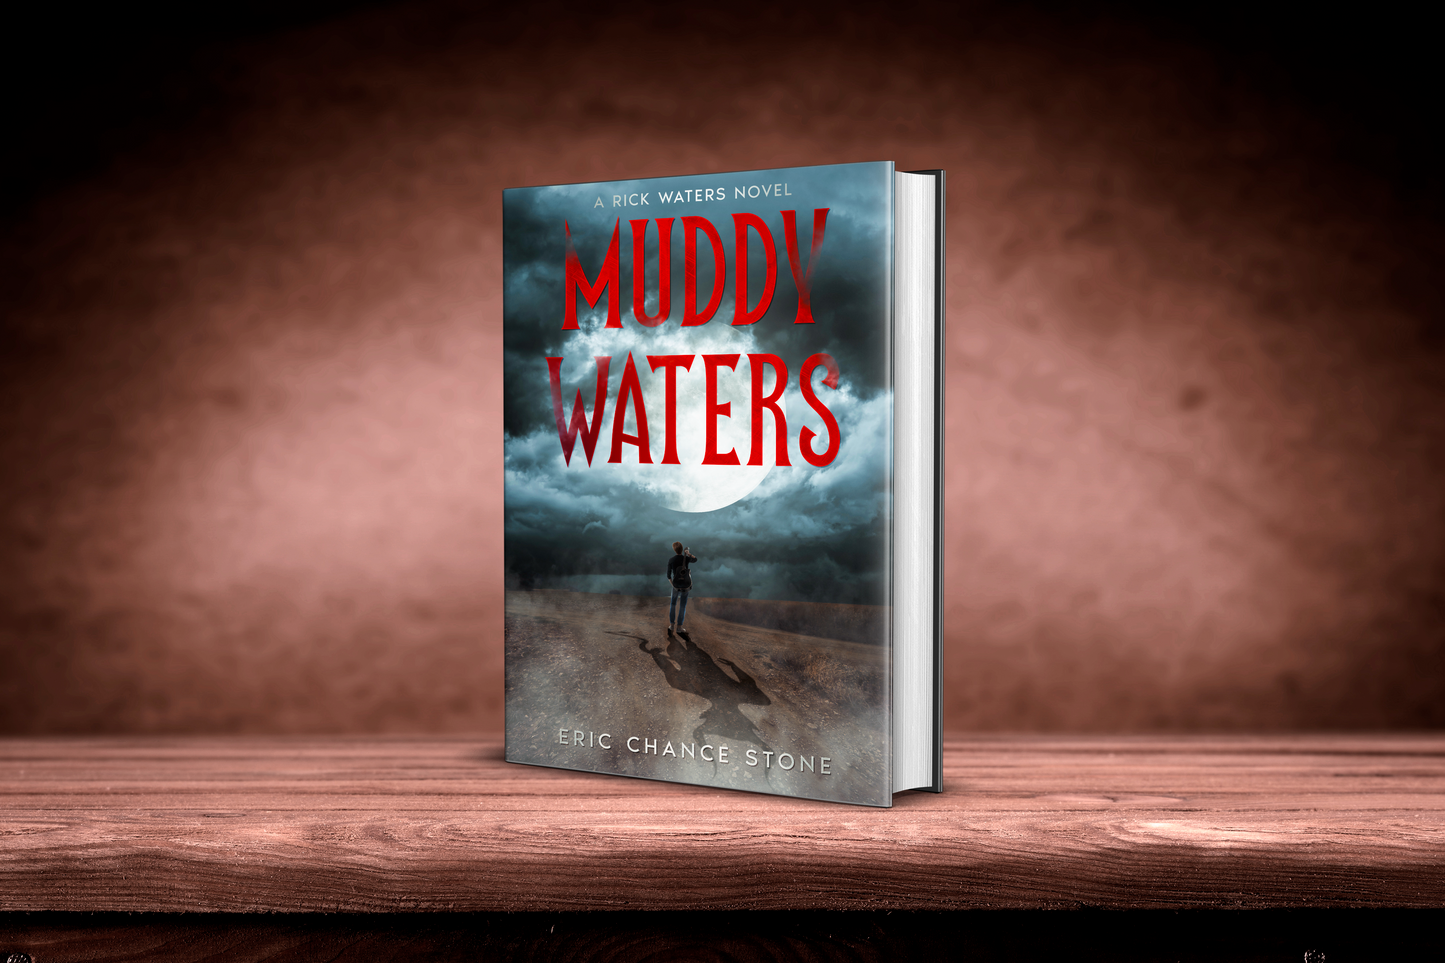 Muddy Waters Paperback - Book 5: A Rick Waters Novel (Caribbean Adventure Series)